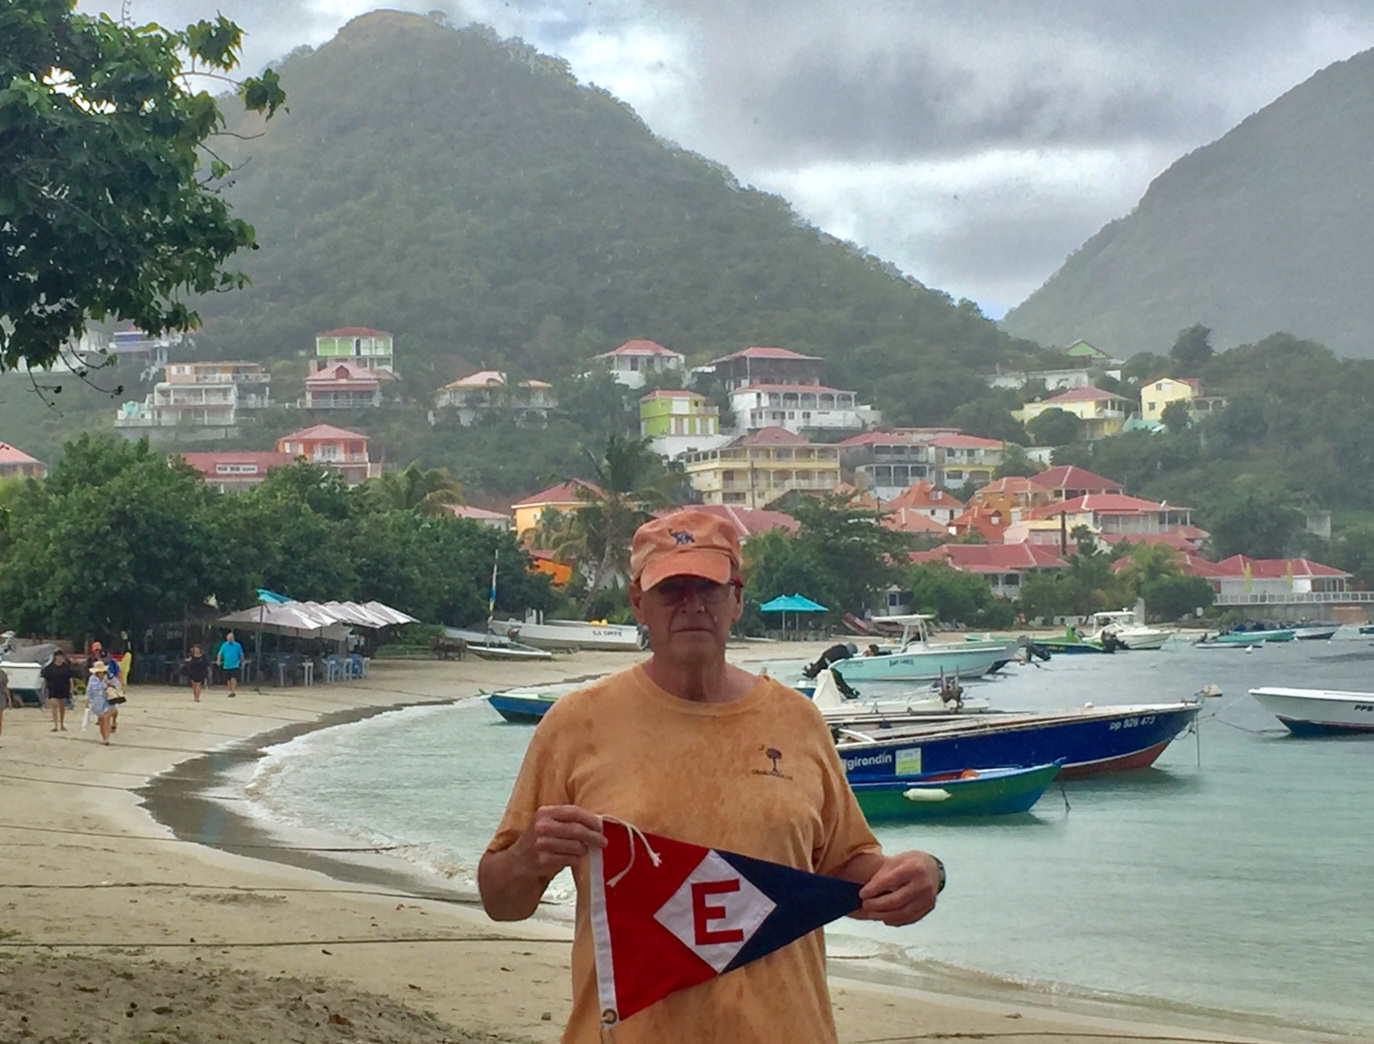  Bob shows his EYC pride in Terre de Haut, Iles de Saintes in the Carribean 